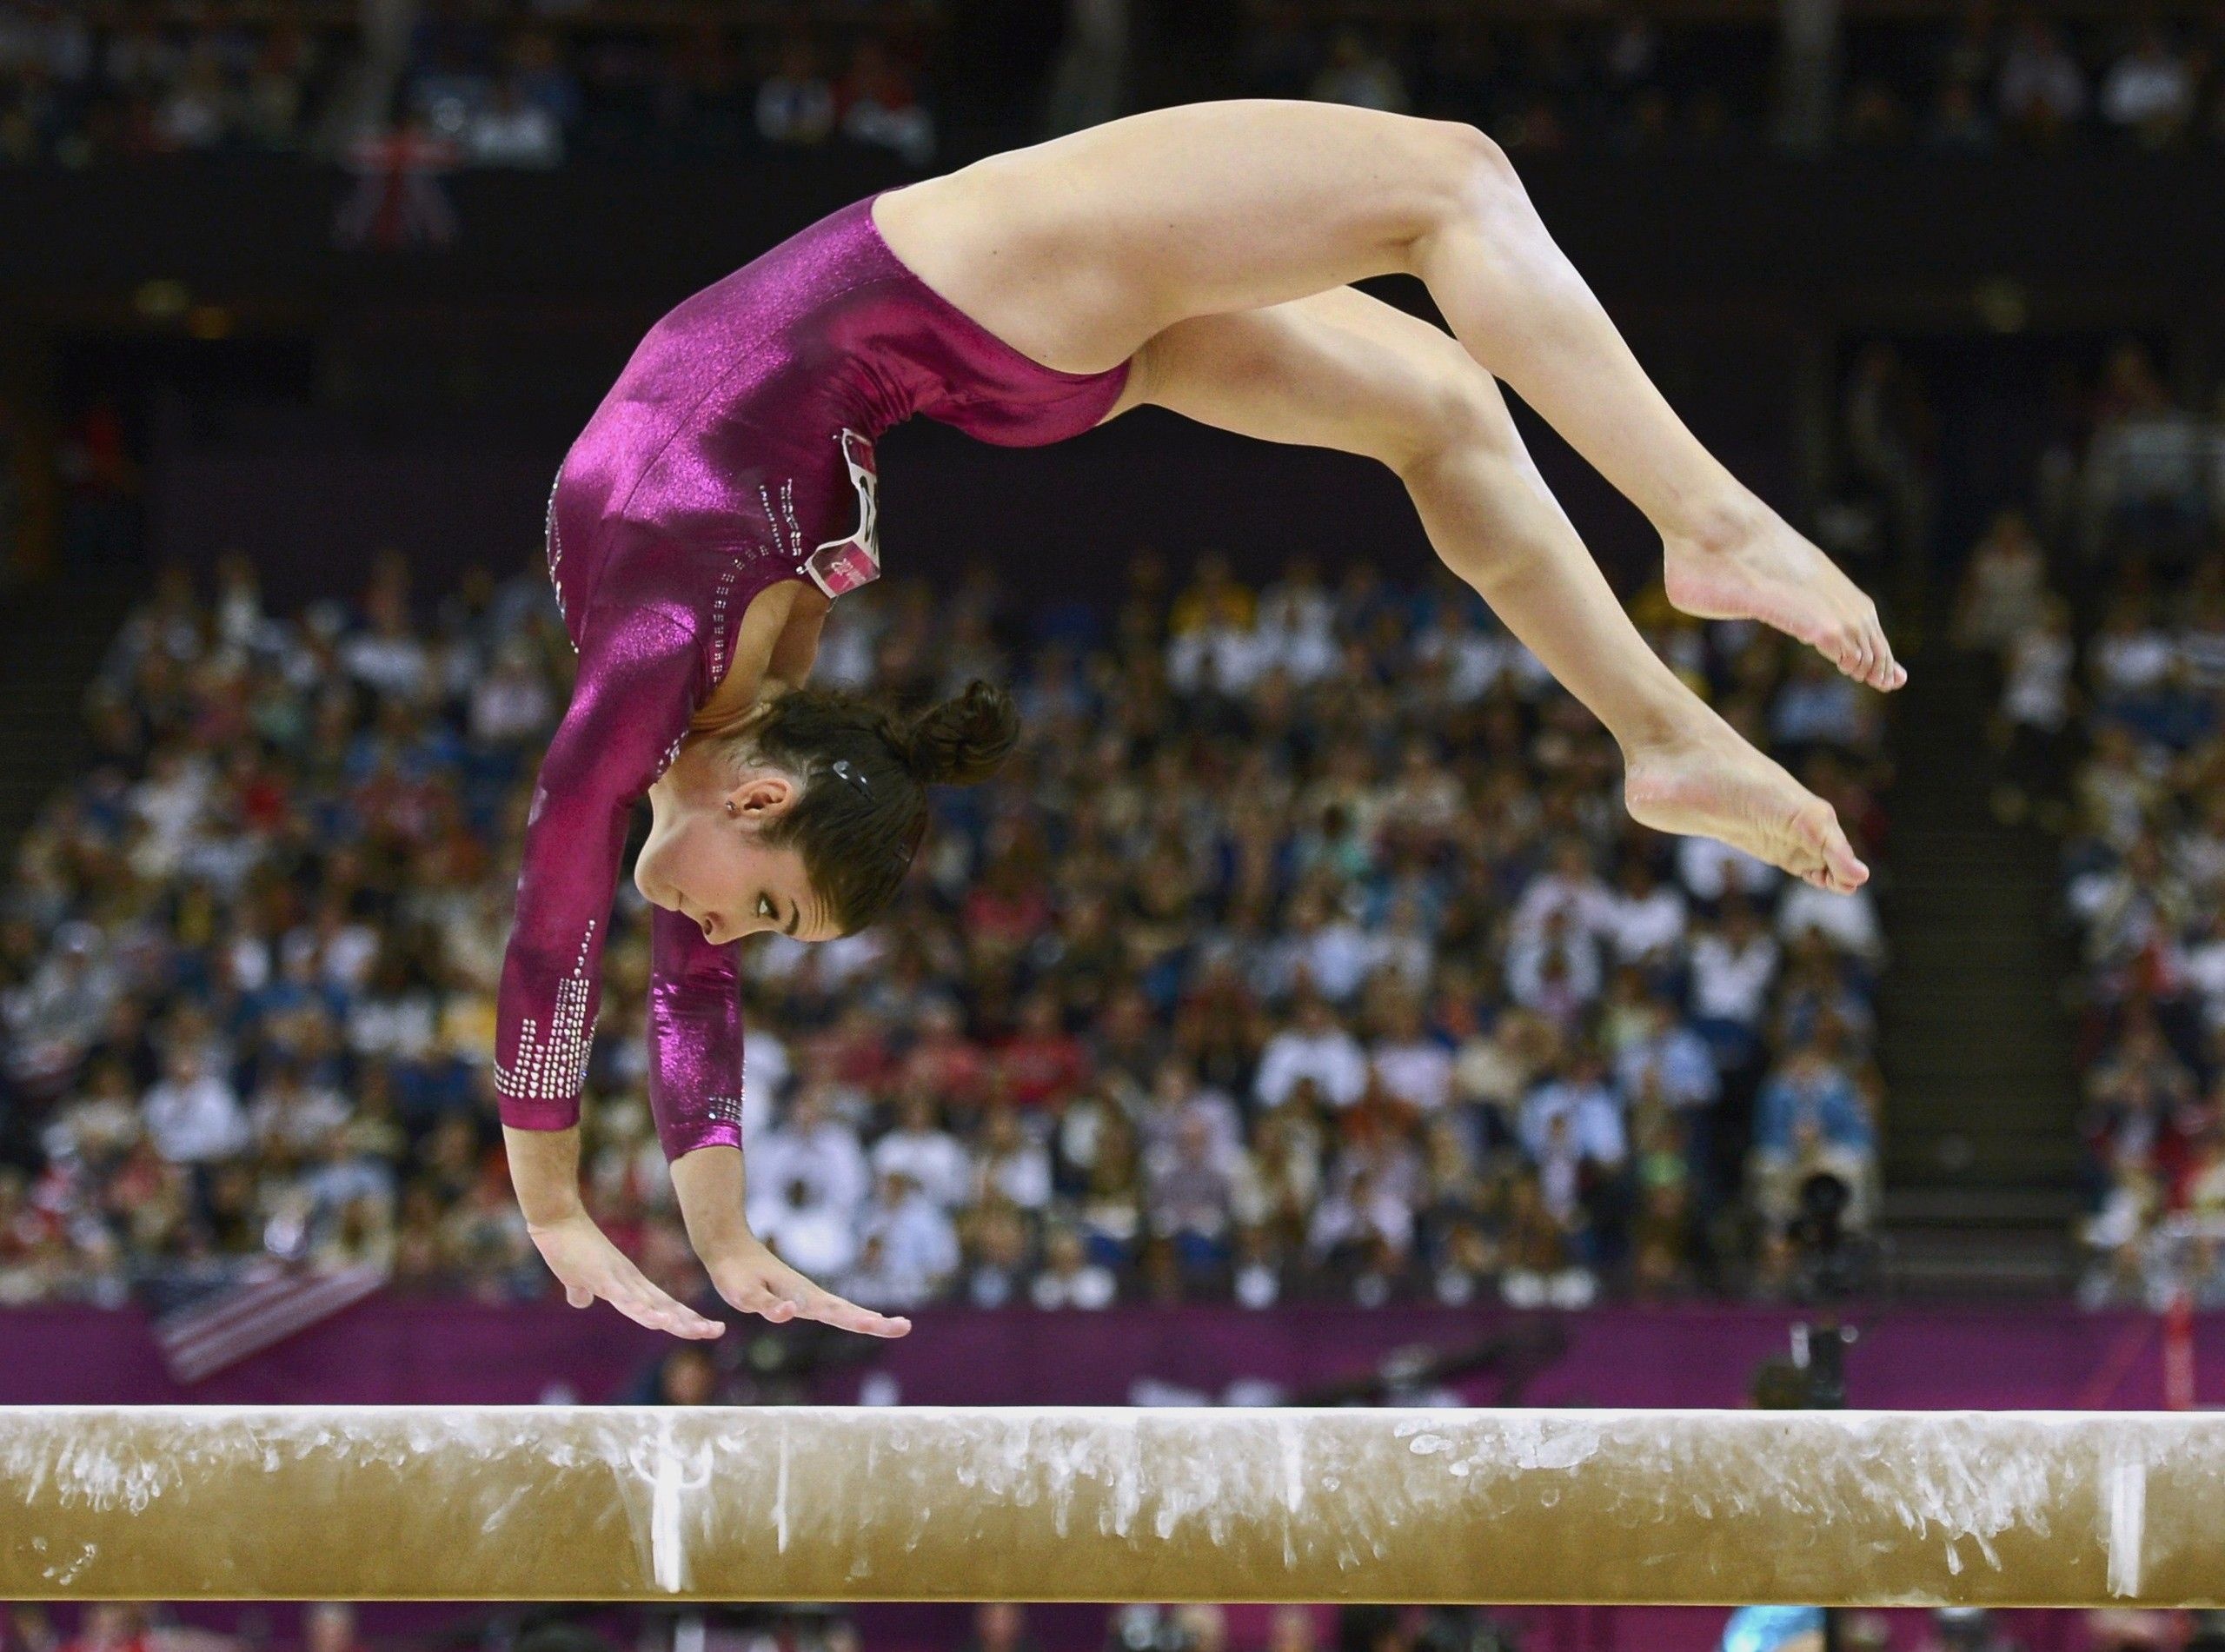 Acrobatic Sports: Gymnast, Balance beam, Back handspring, Performance skills. 2560x1910 HD Wallpaper.